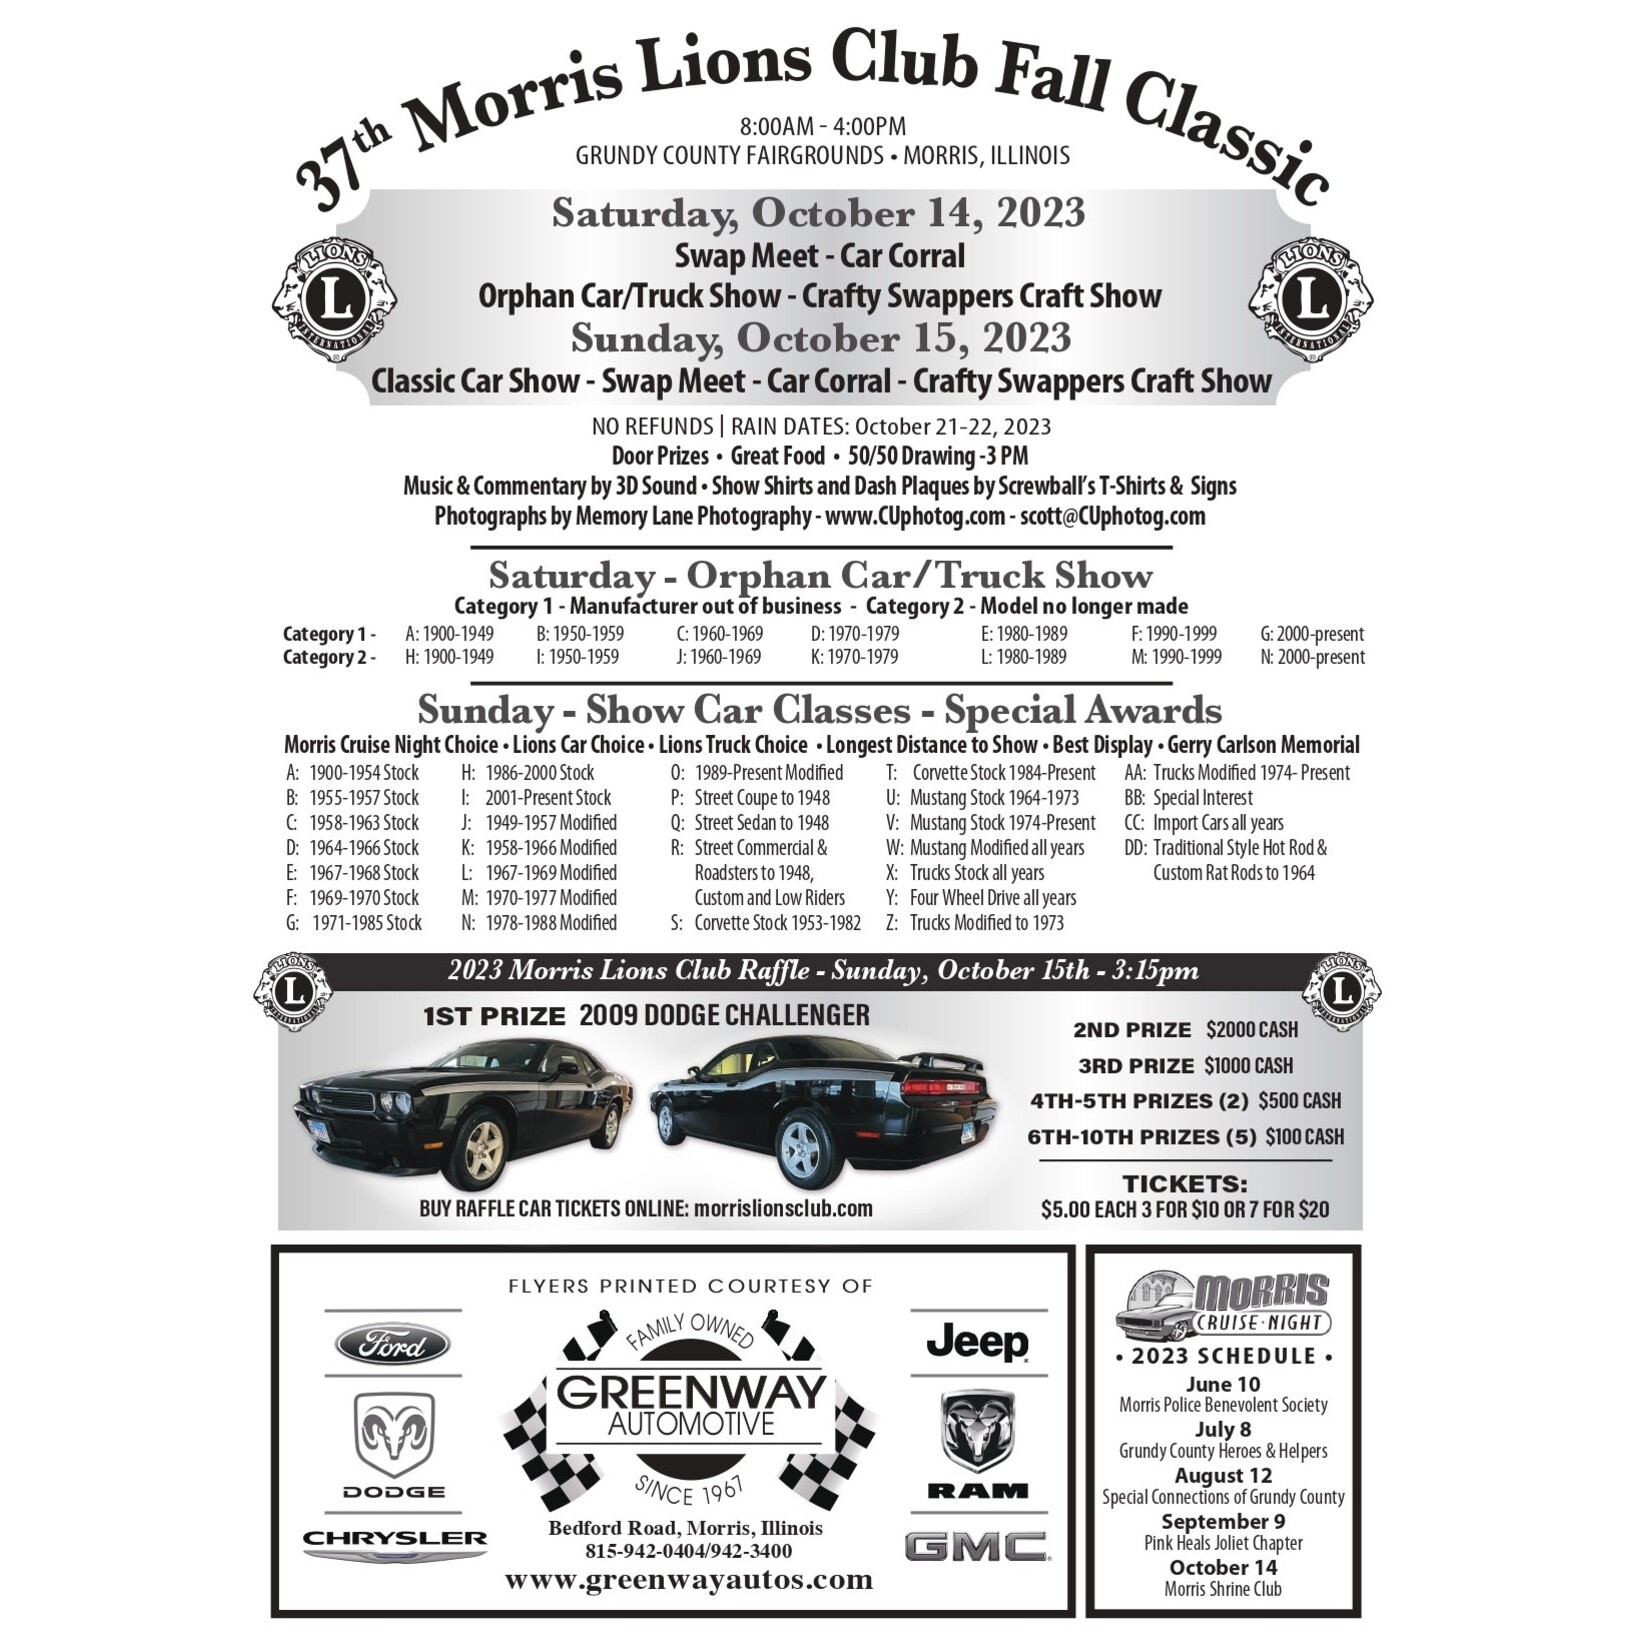 Morris Lions Club Fall Classic Car Show-Morris Morris Lions Club Fall Classic Car Show-Morris $5 Spectator Pass 2023 Fall Classic Car Show